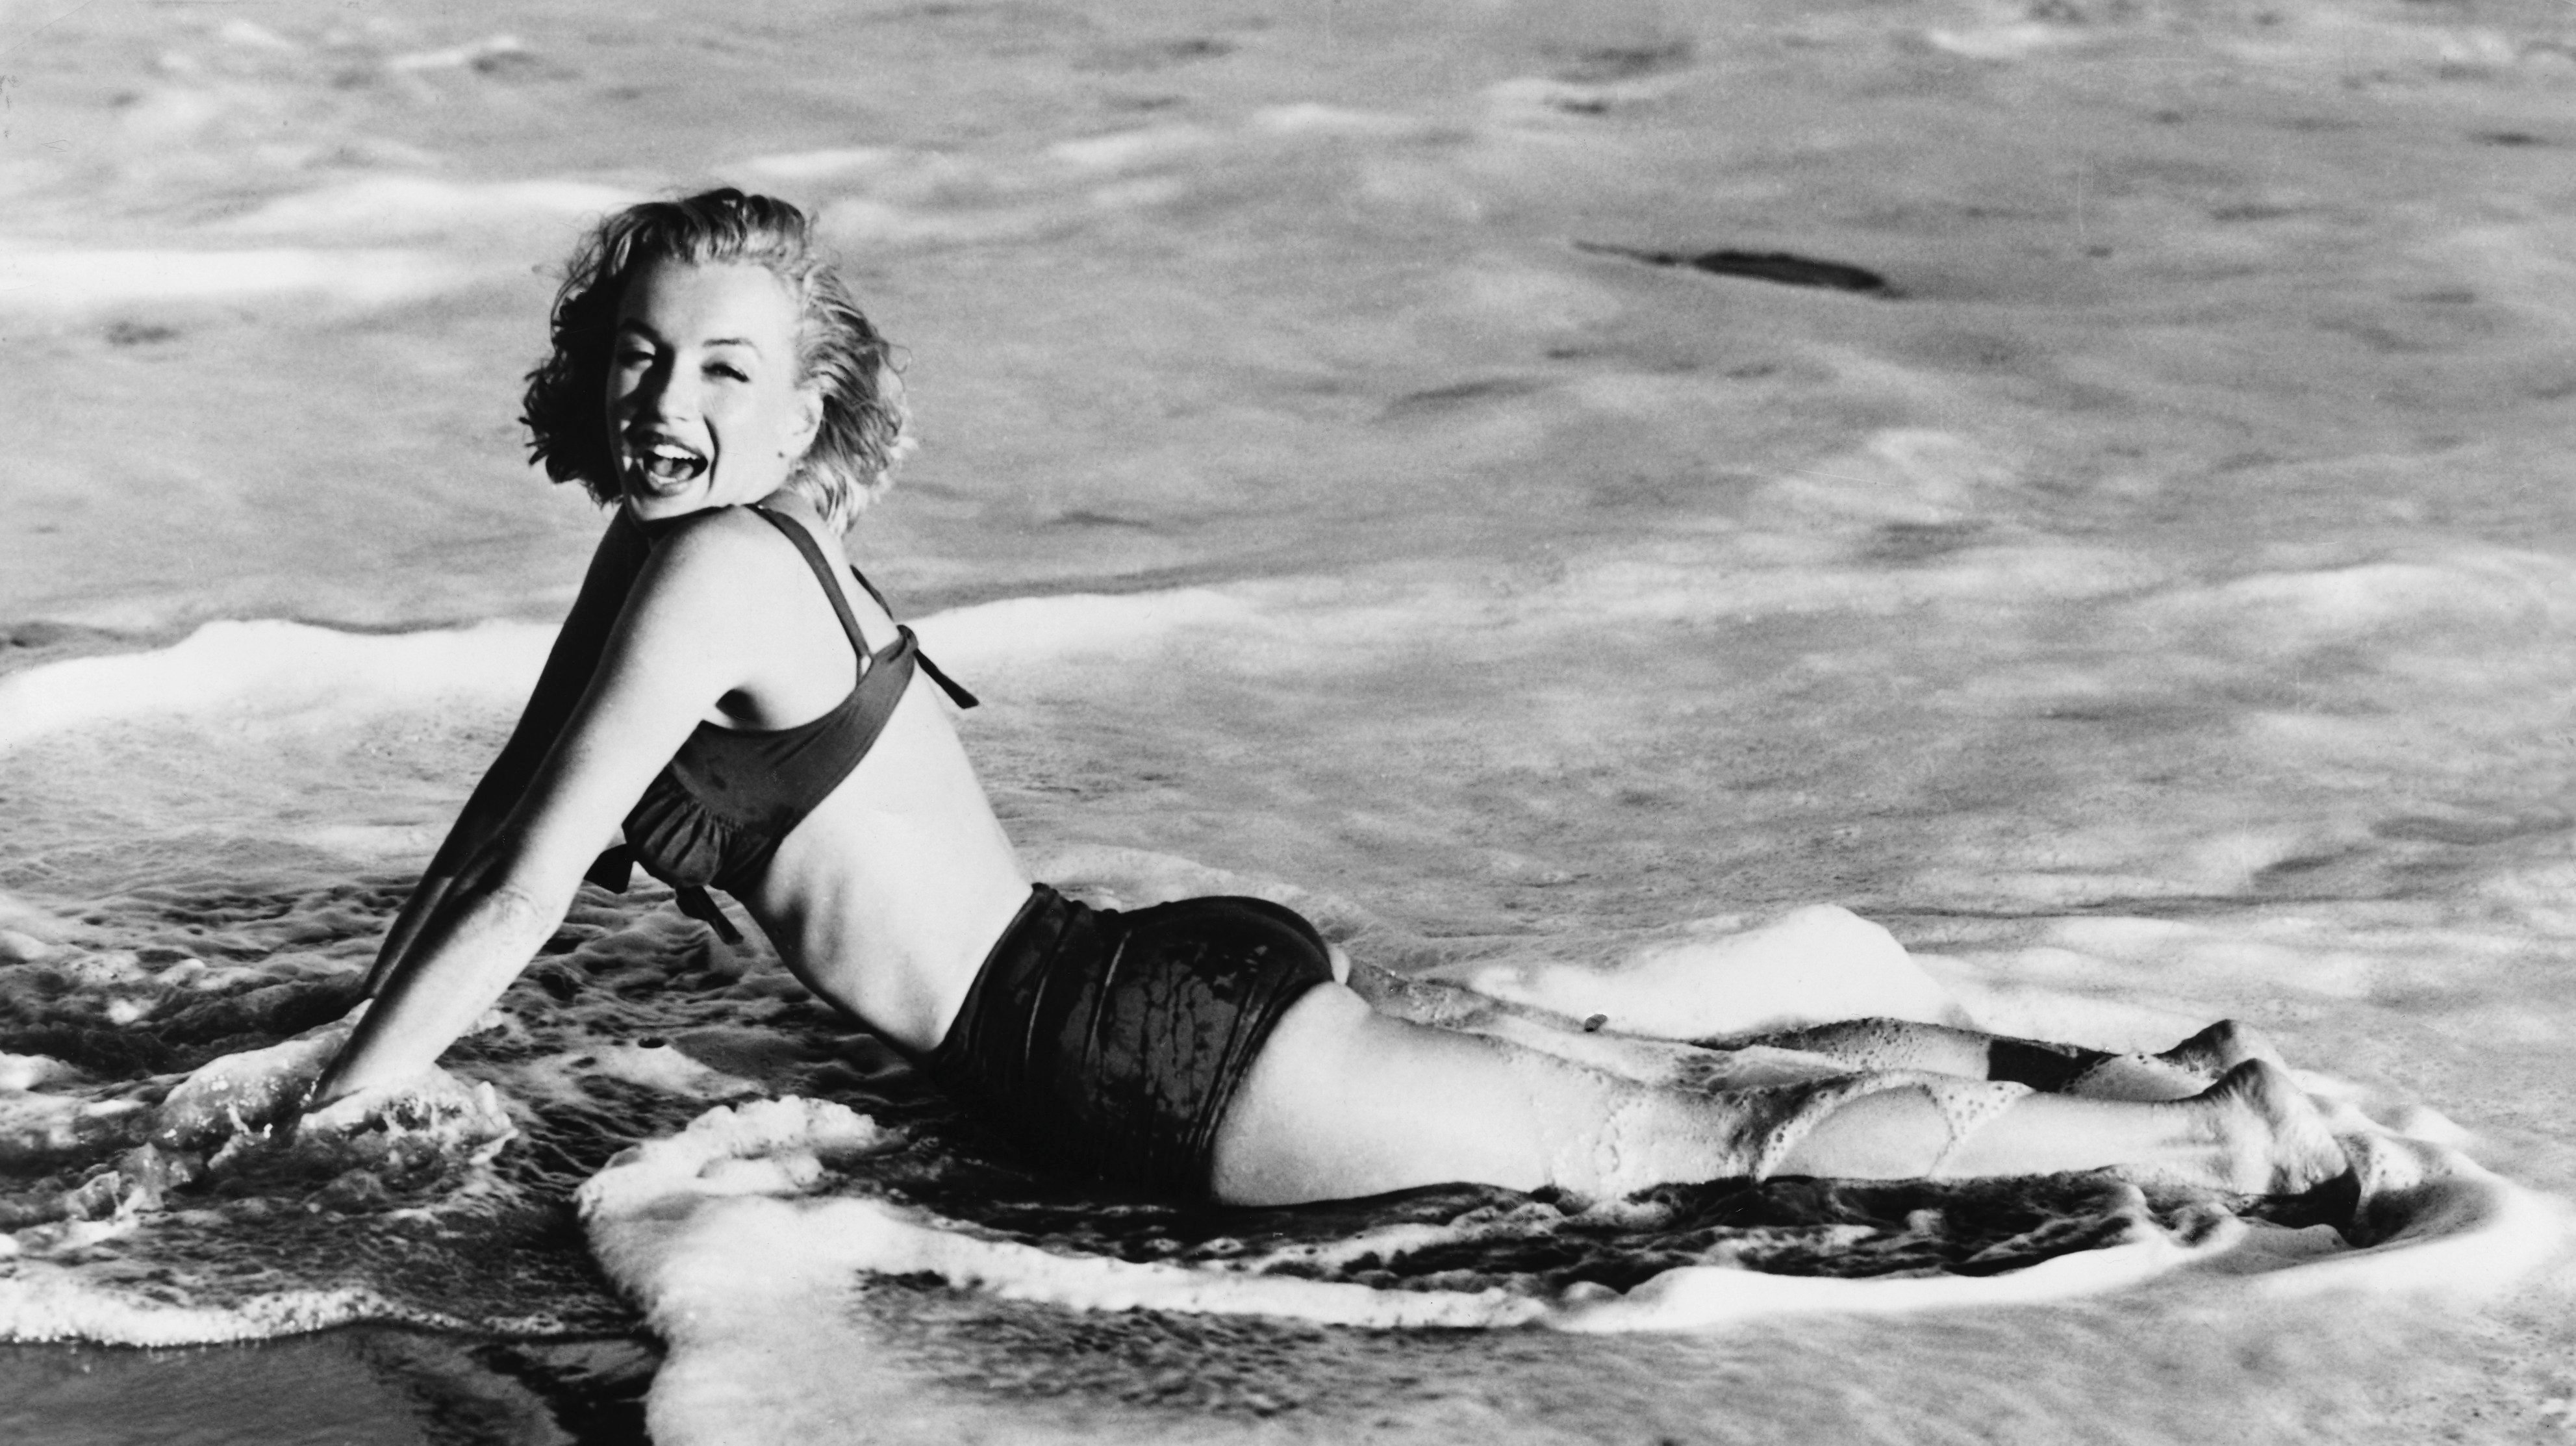 Marilyn Monroe Lying in Surf